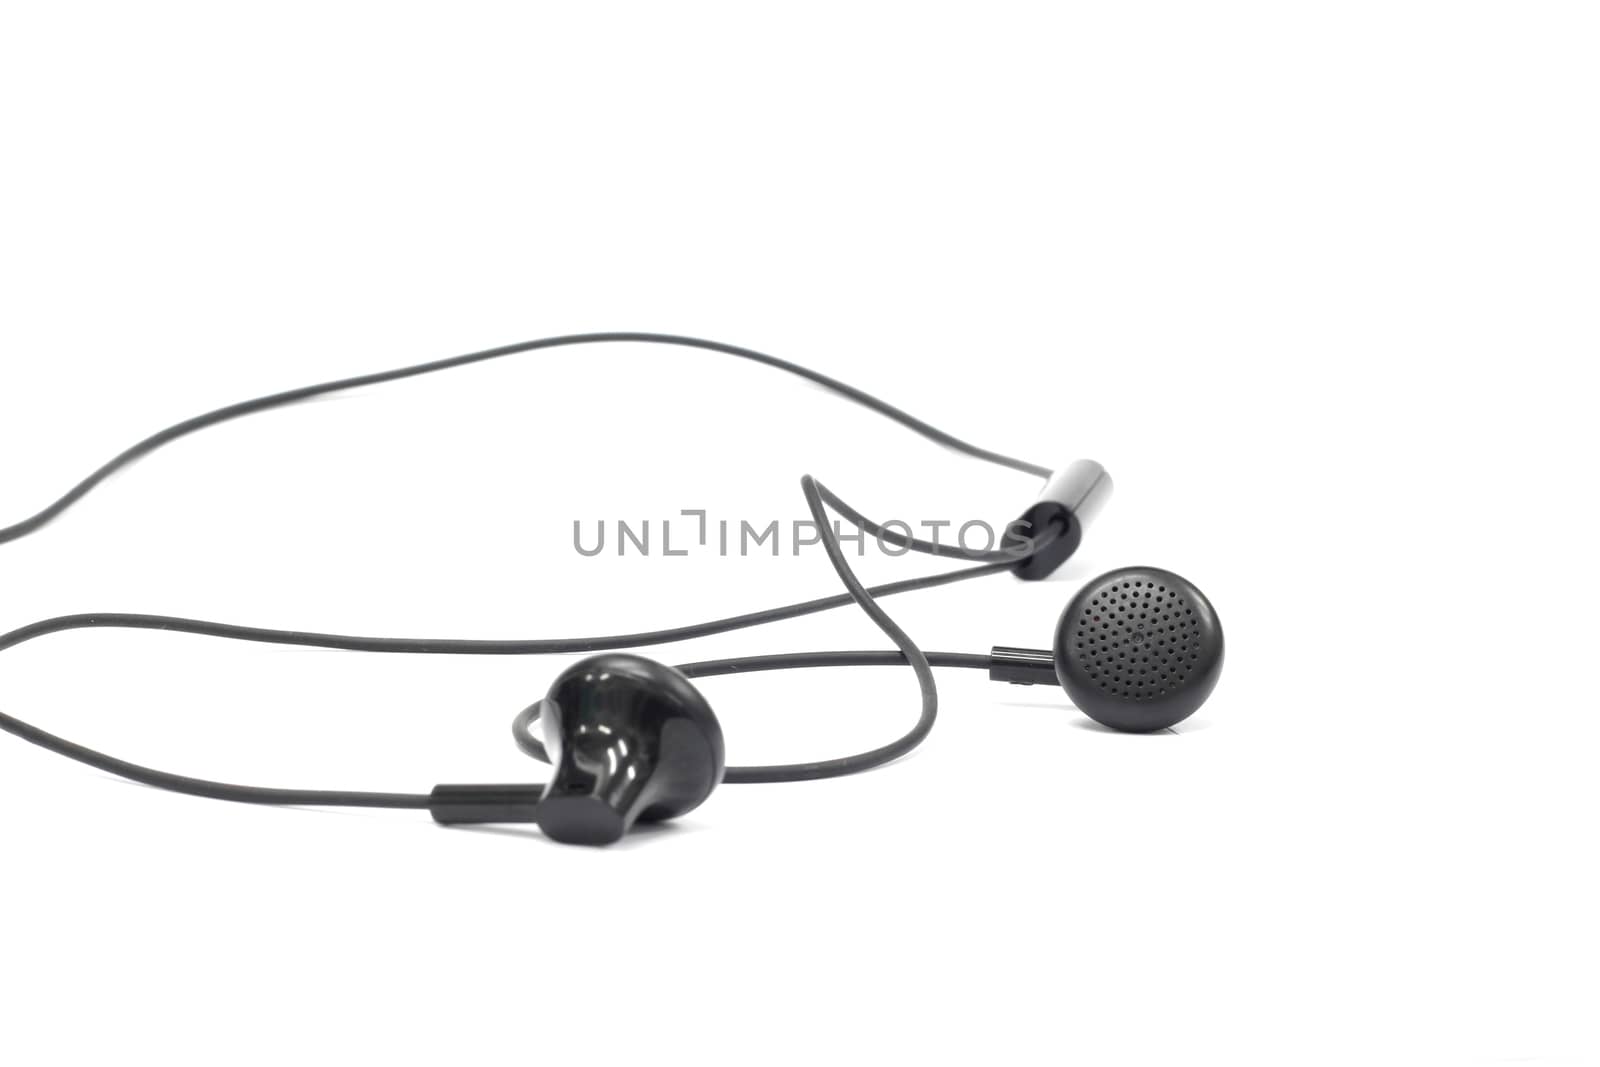 isolated white bac kground  black earphones